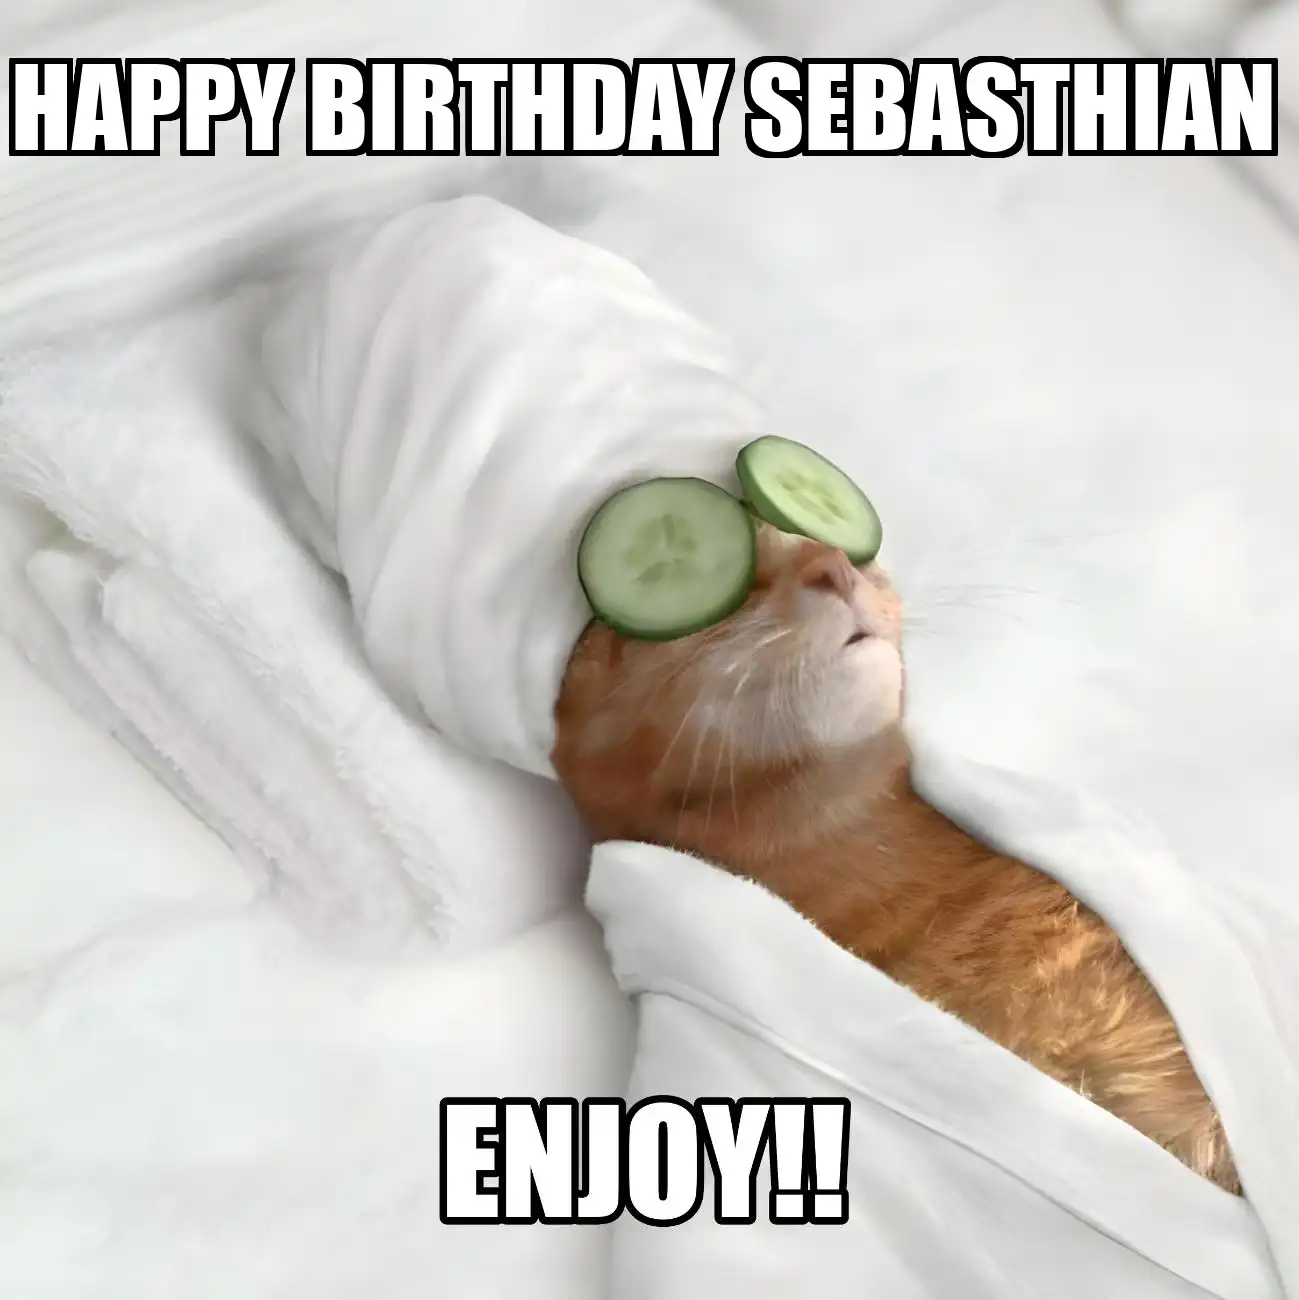 Happy Birthday Sebasthian Enjoy Cat Meme